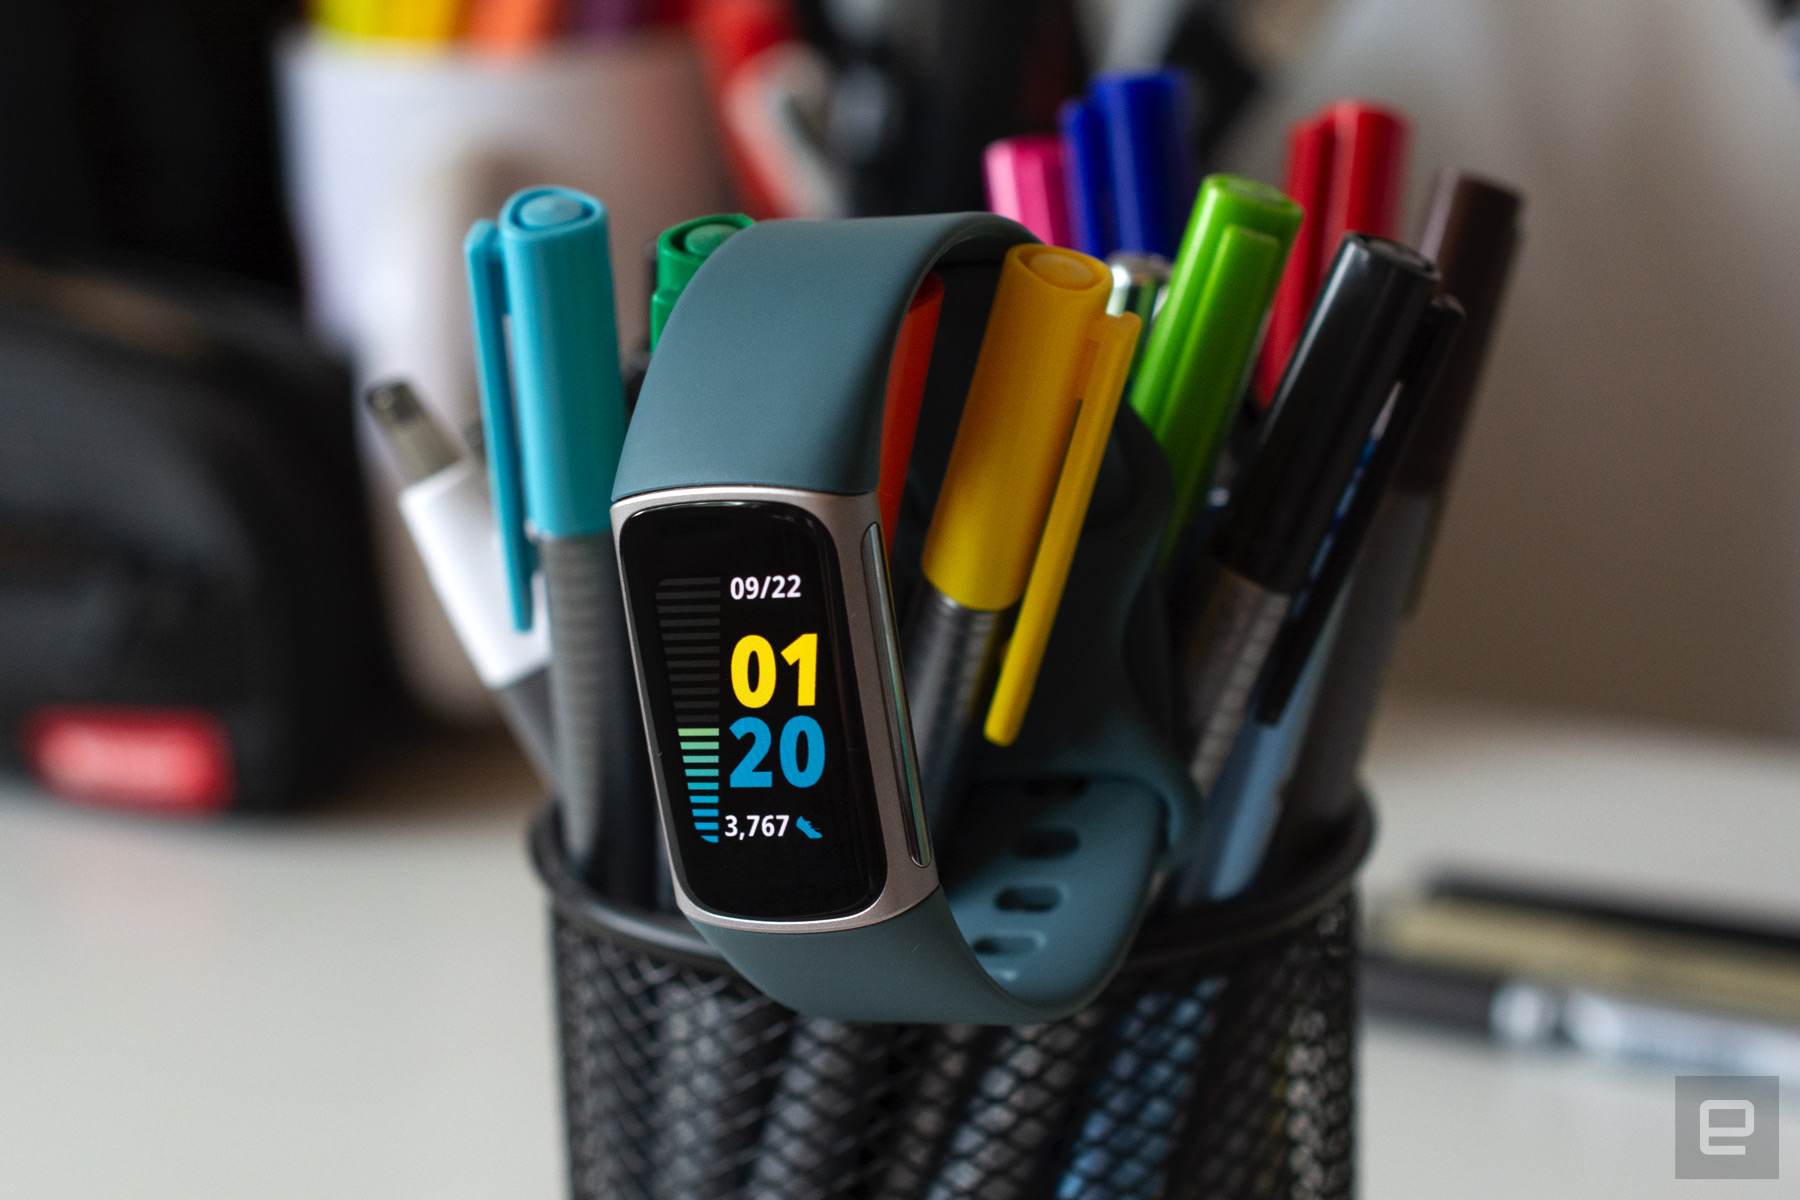 Fitbit Charge 5 fitness tracker" data-uuid="ca46117f-31ba-348e-ba70-454214b82e76